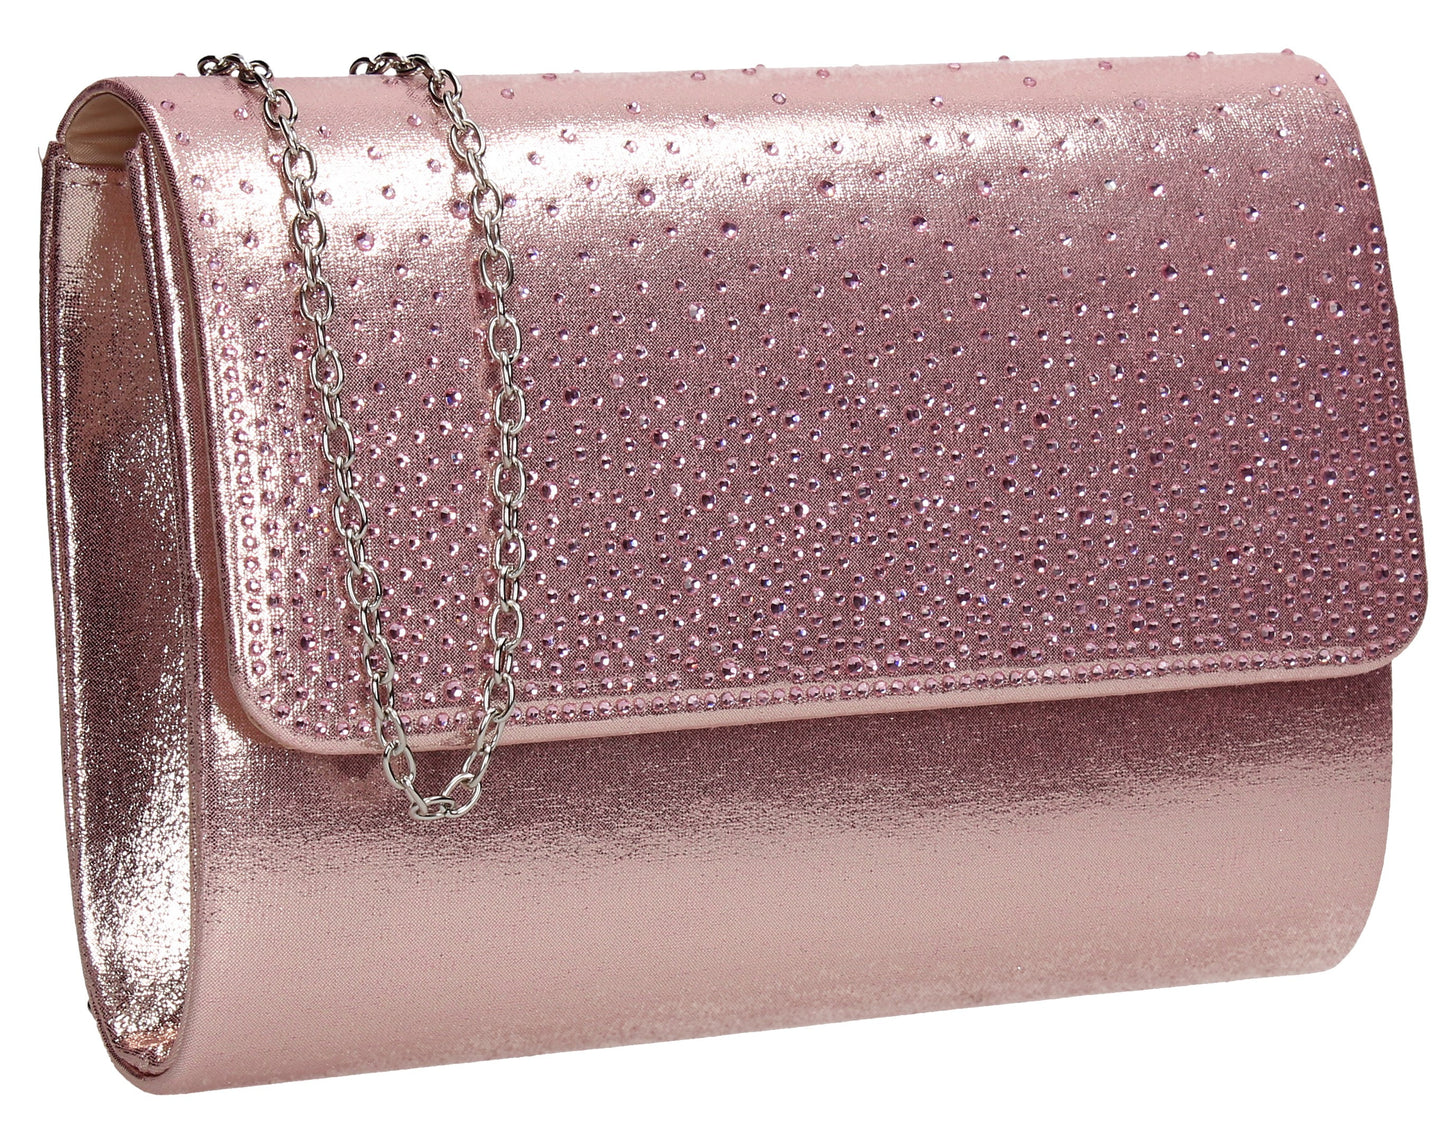 SWANKYSWANS Natalie Diamante Clutch Bag Pink Cute Cheap Clutch Bag For Weddings School and Work